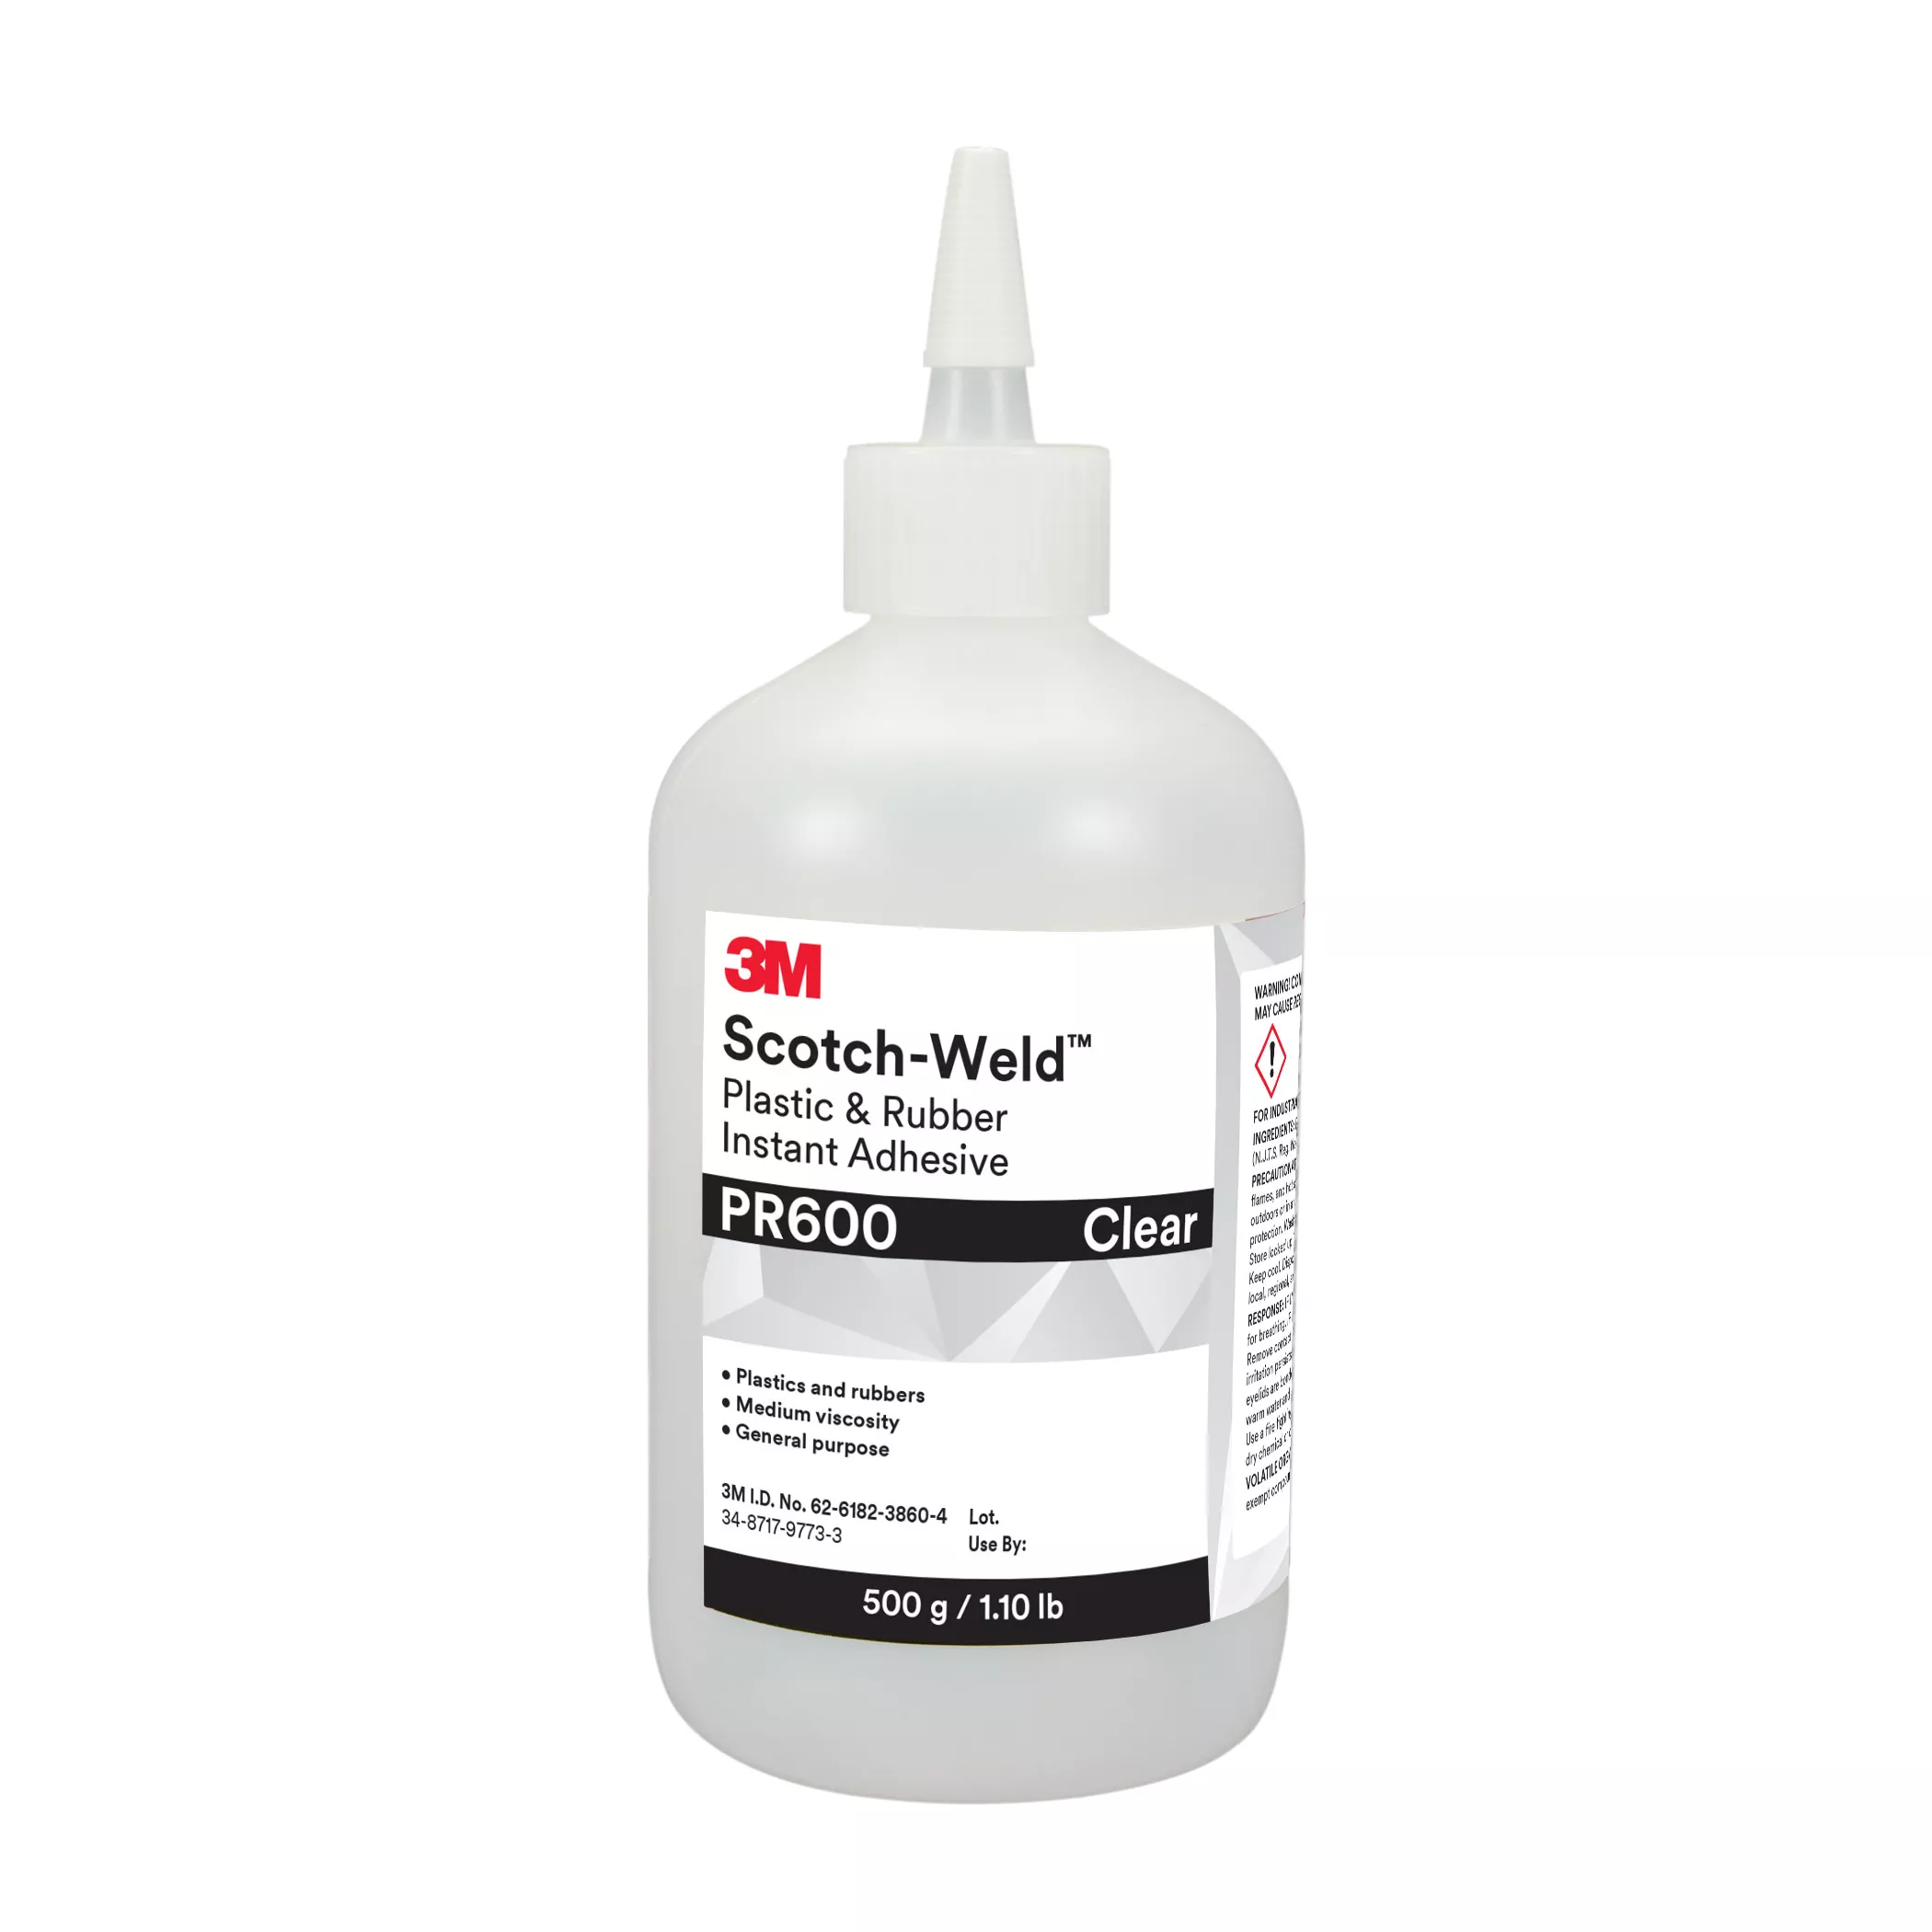 3M™ Scotch-Weld™ Plastic & Rubber Instant Adhesive PR600, Clear, 500
Gram, 1/Case